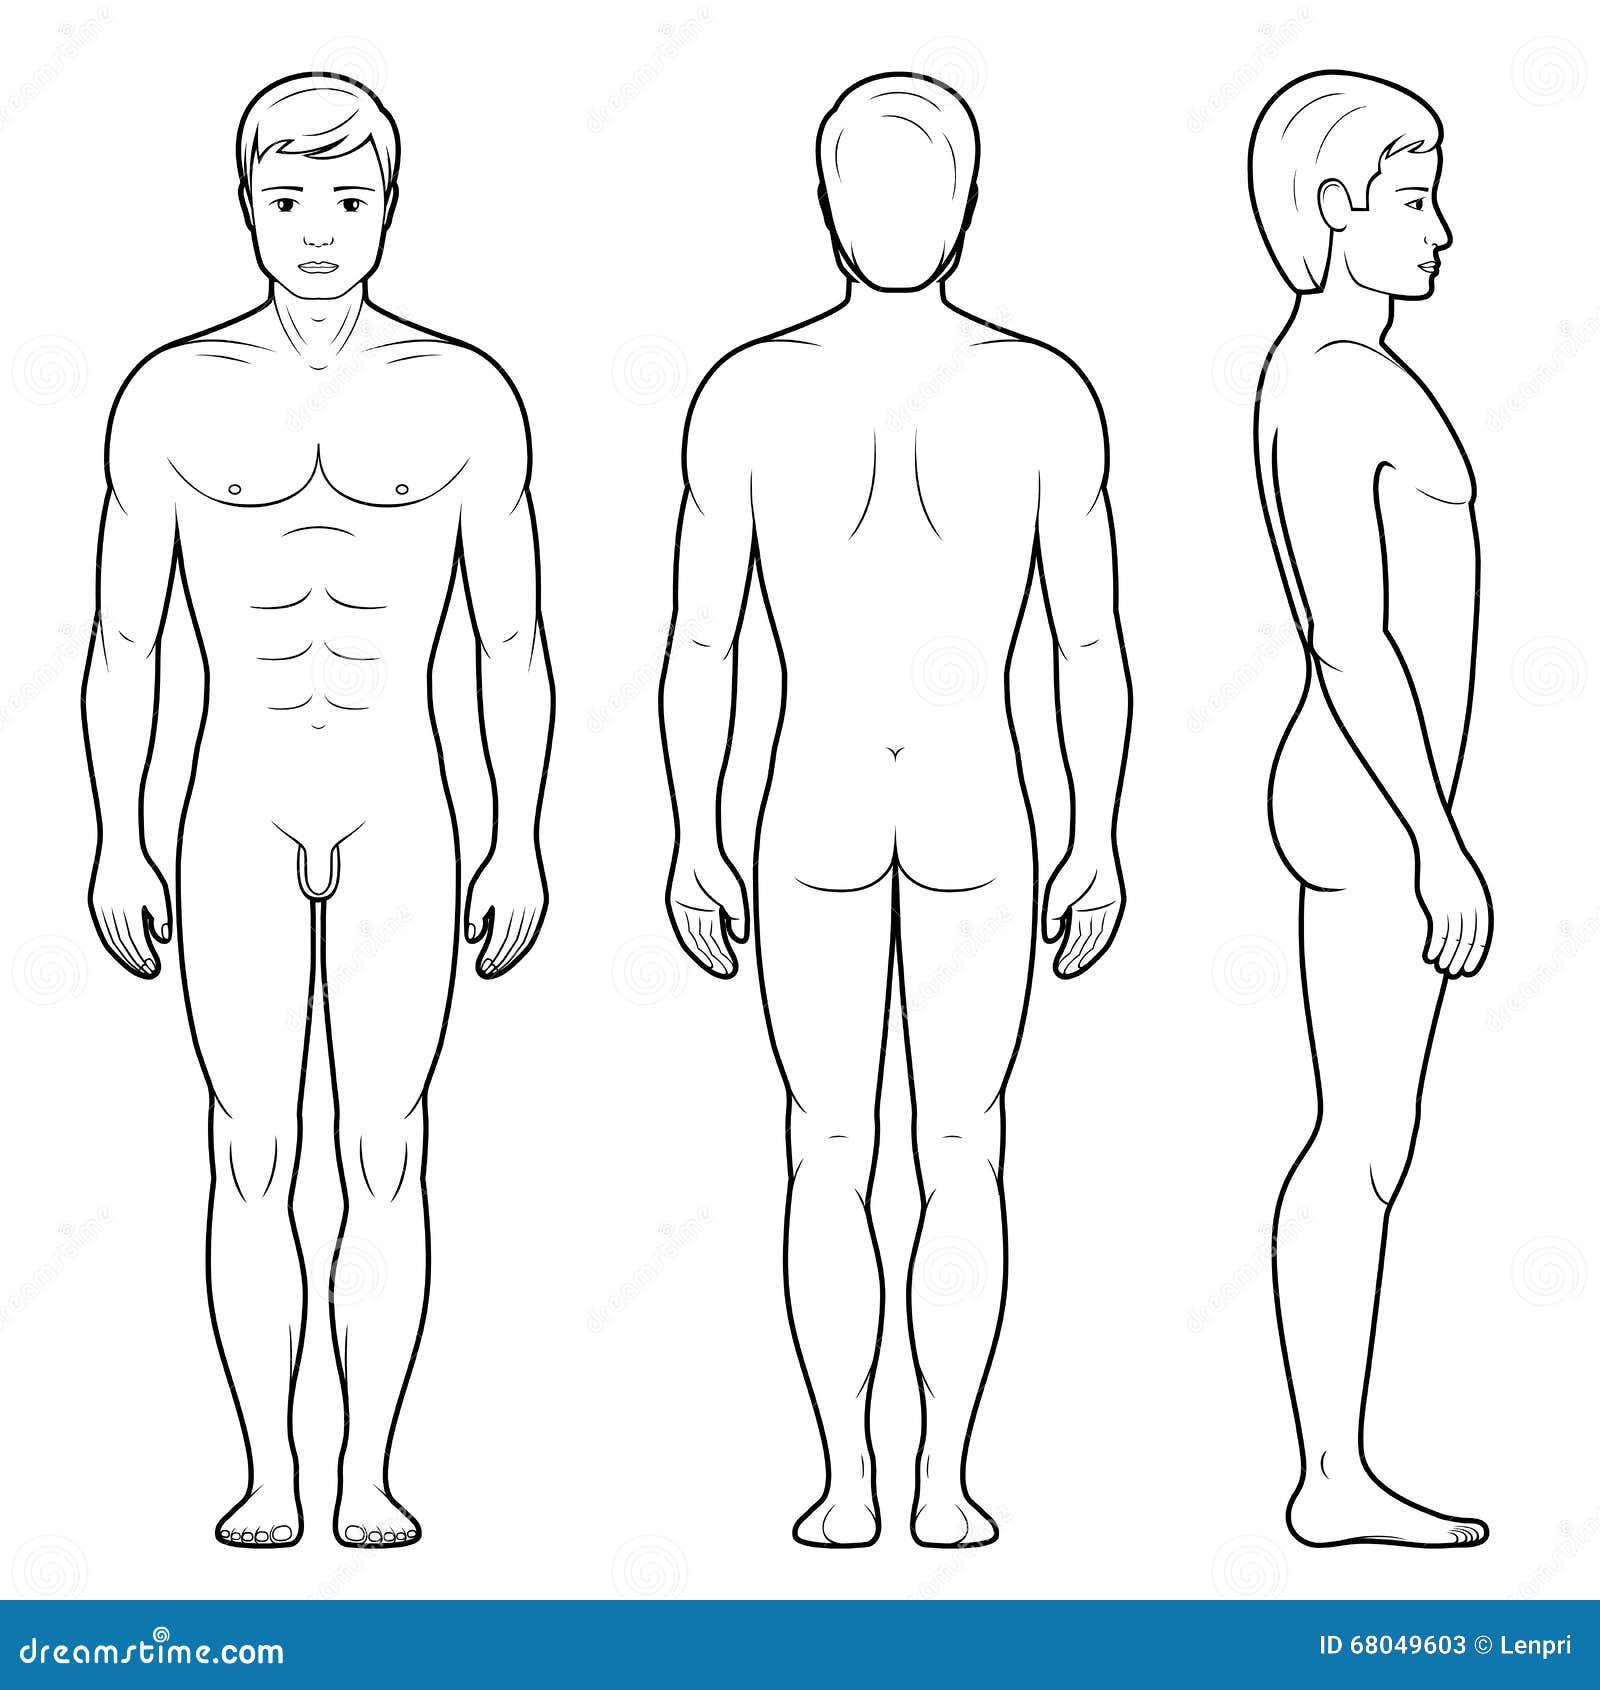 20700 Male Anatomy Illustrations RoyaltyFree Vector Graphics  Clip Art   iStock  Male anatomy illustration Male anatomy legs Male anatomy  bladder